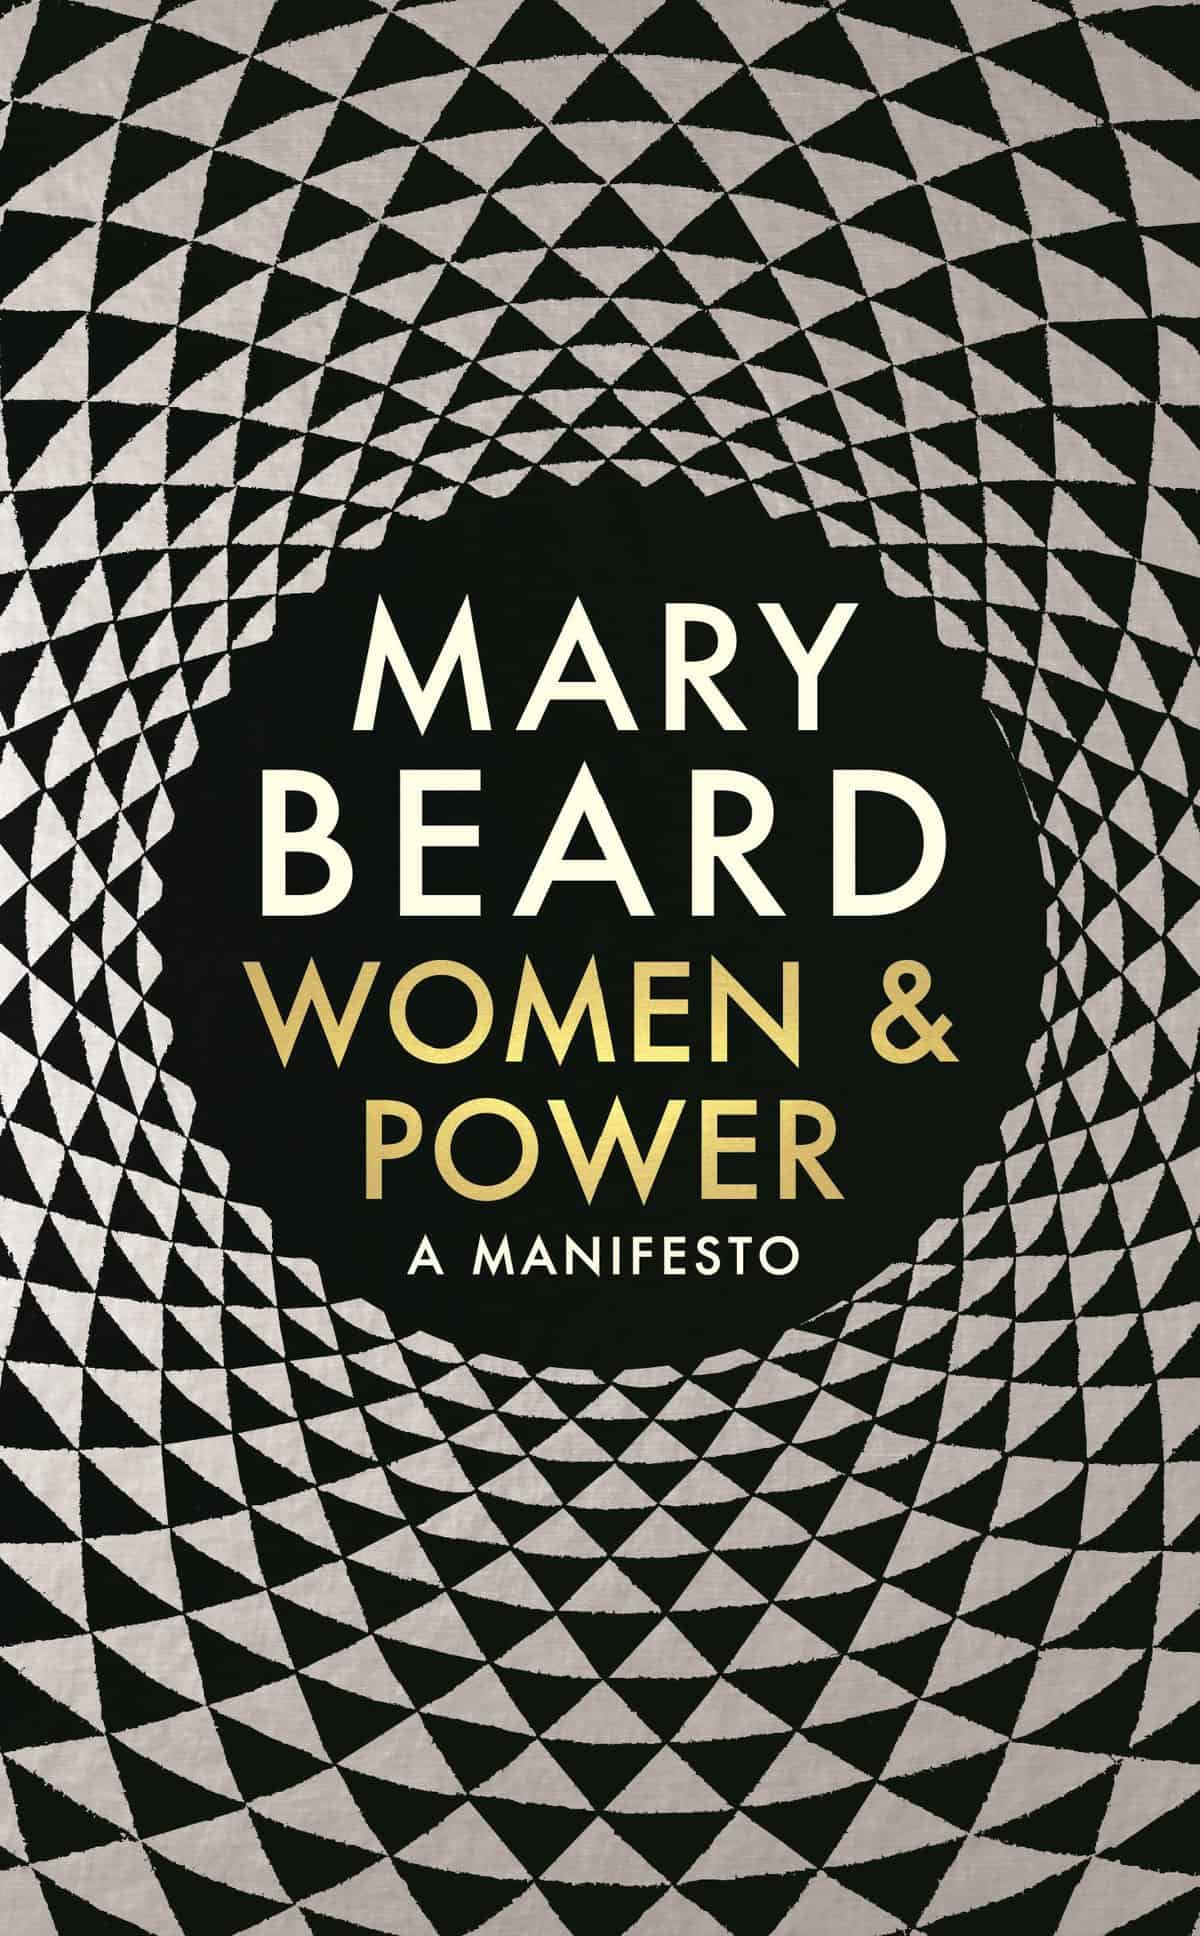 Women & Power a Manifesto by Mary Beard